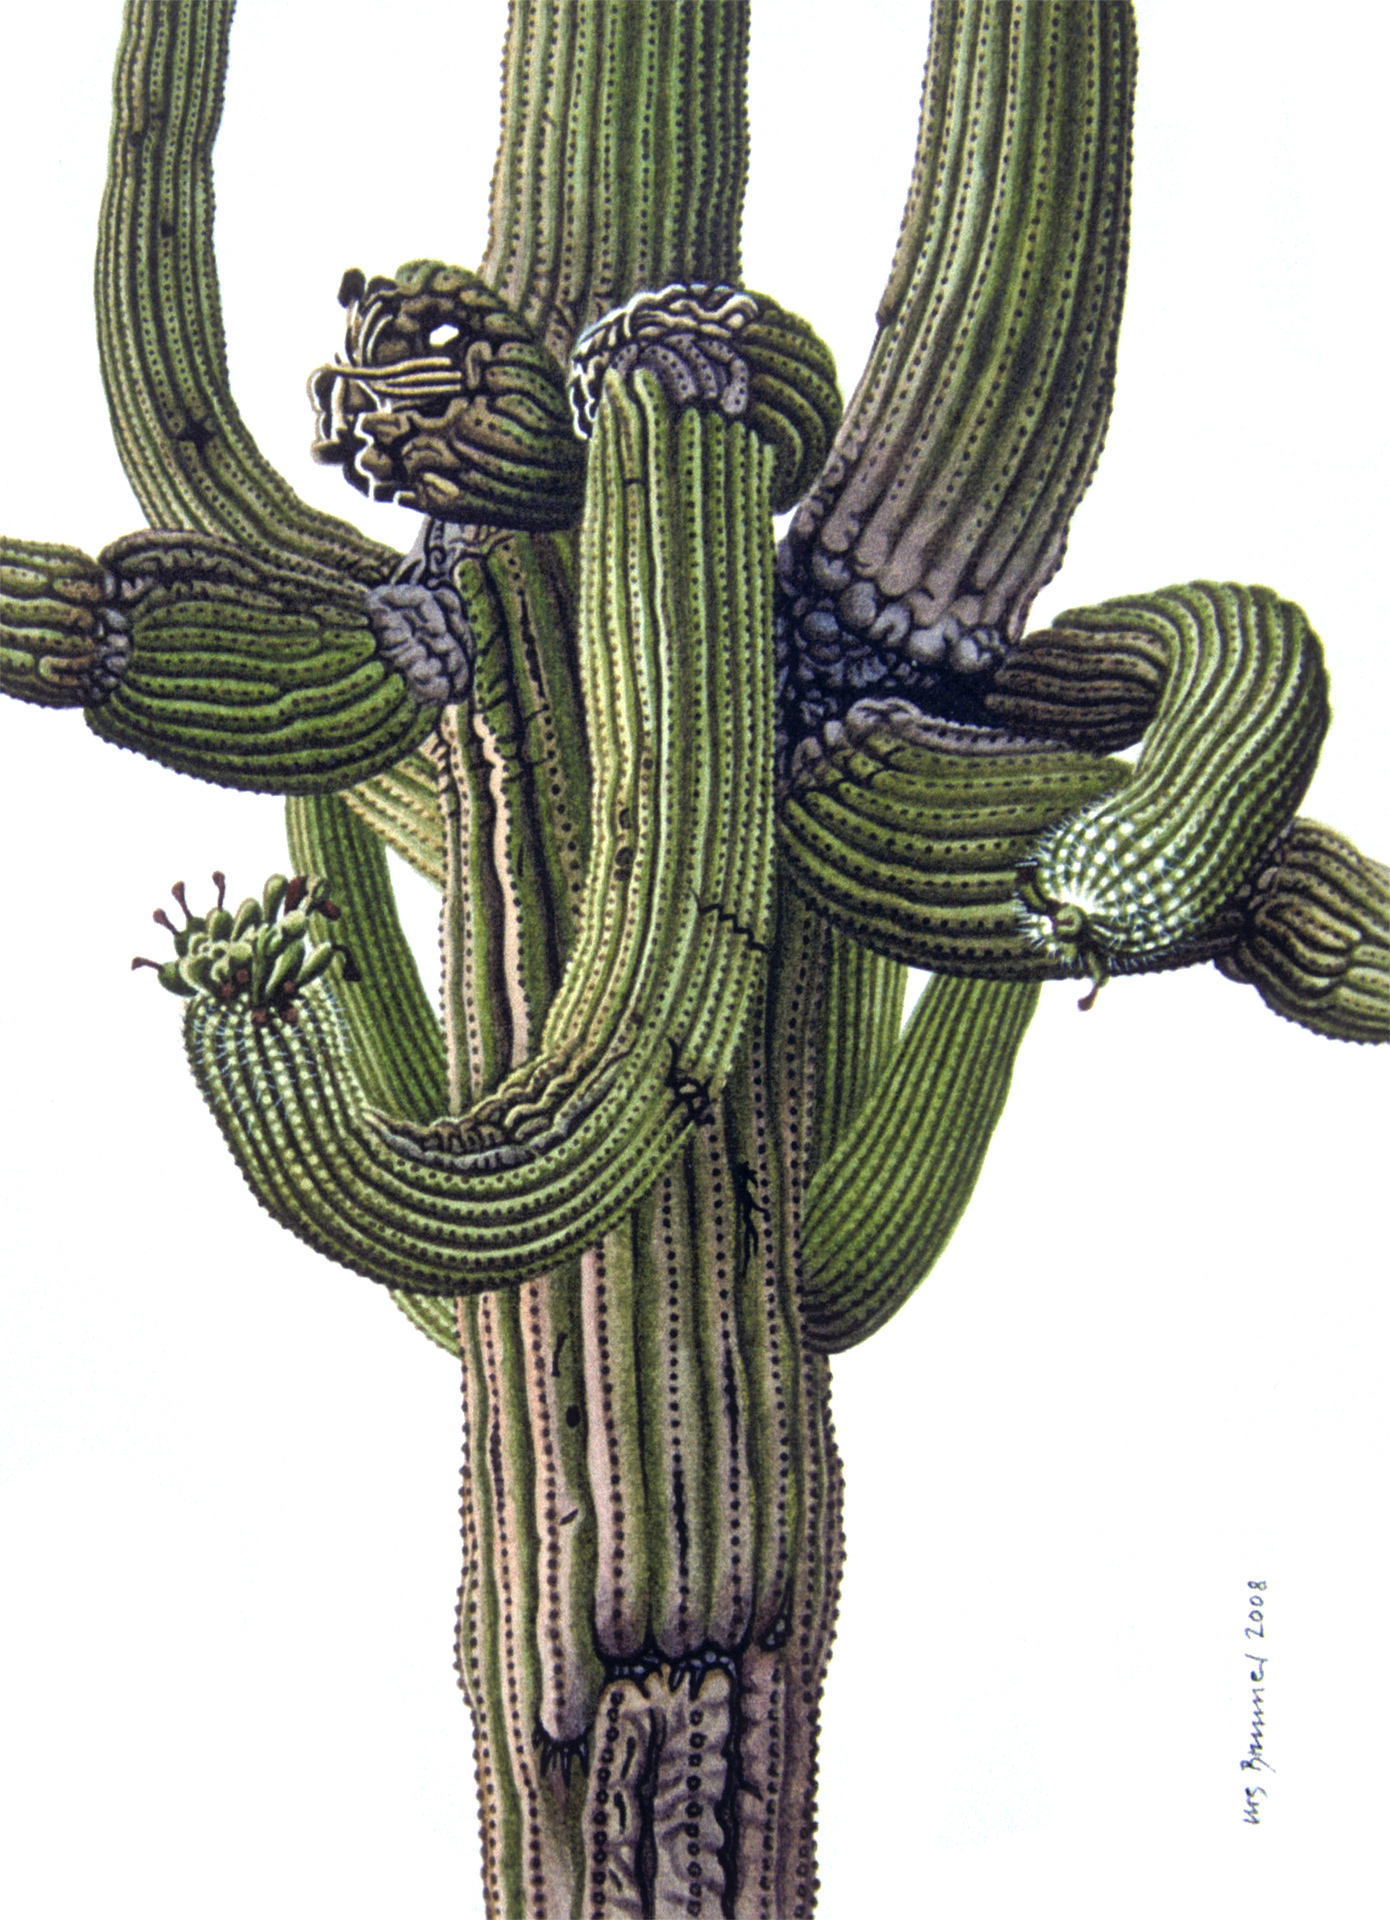 Saguaro lll, 2008, Aquarell auf Papier, 33 x 27 cm